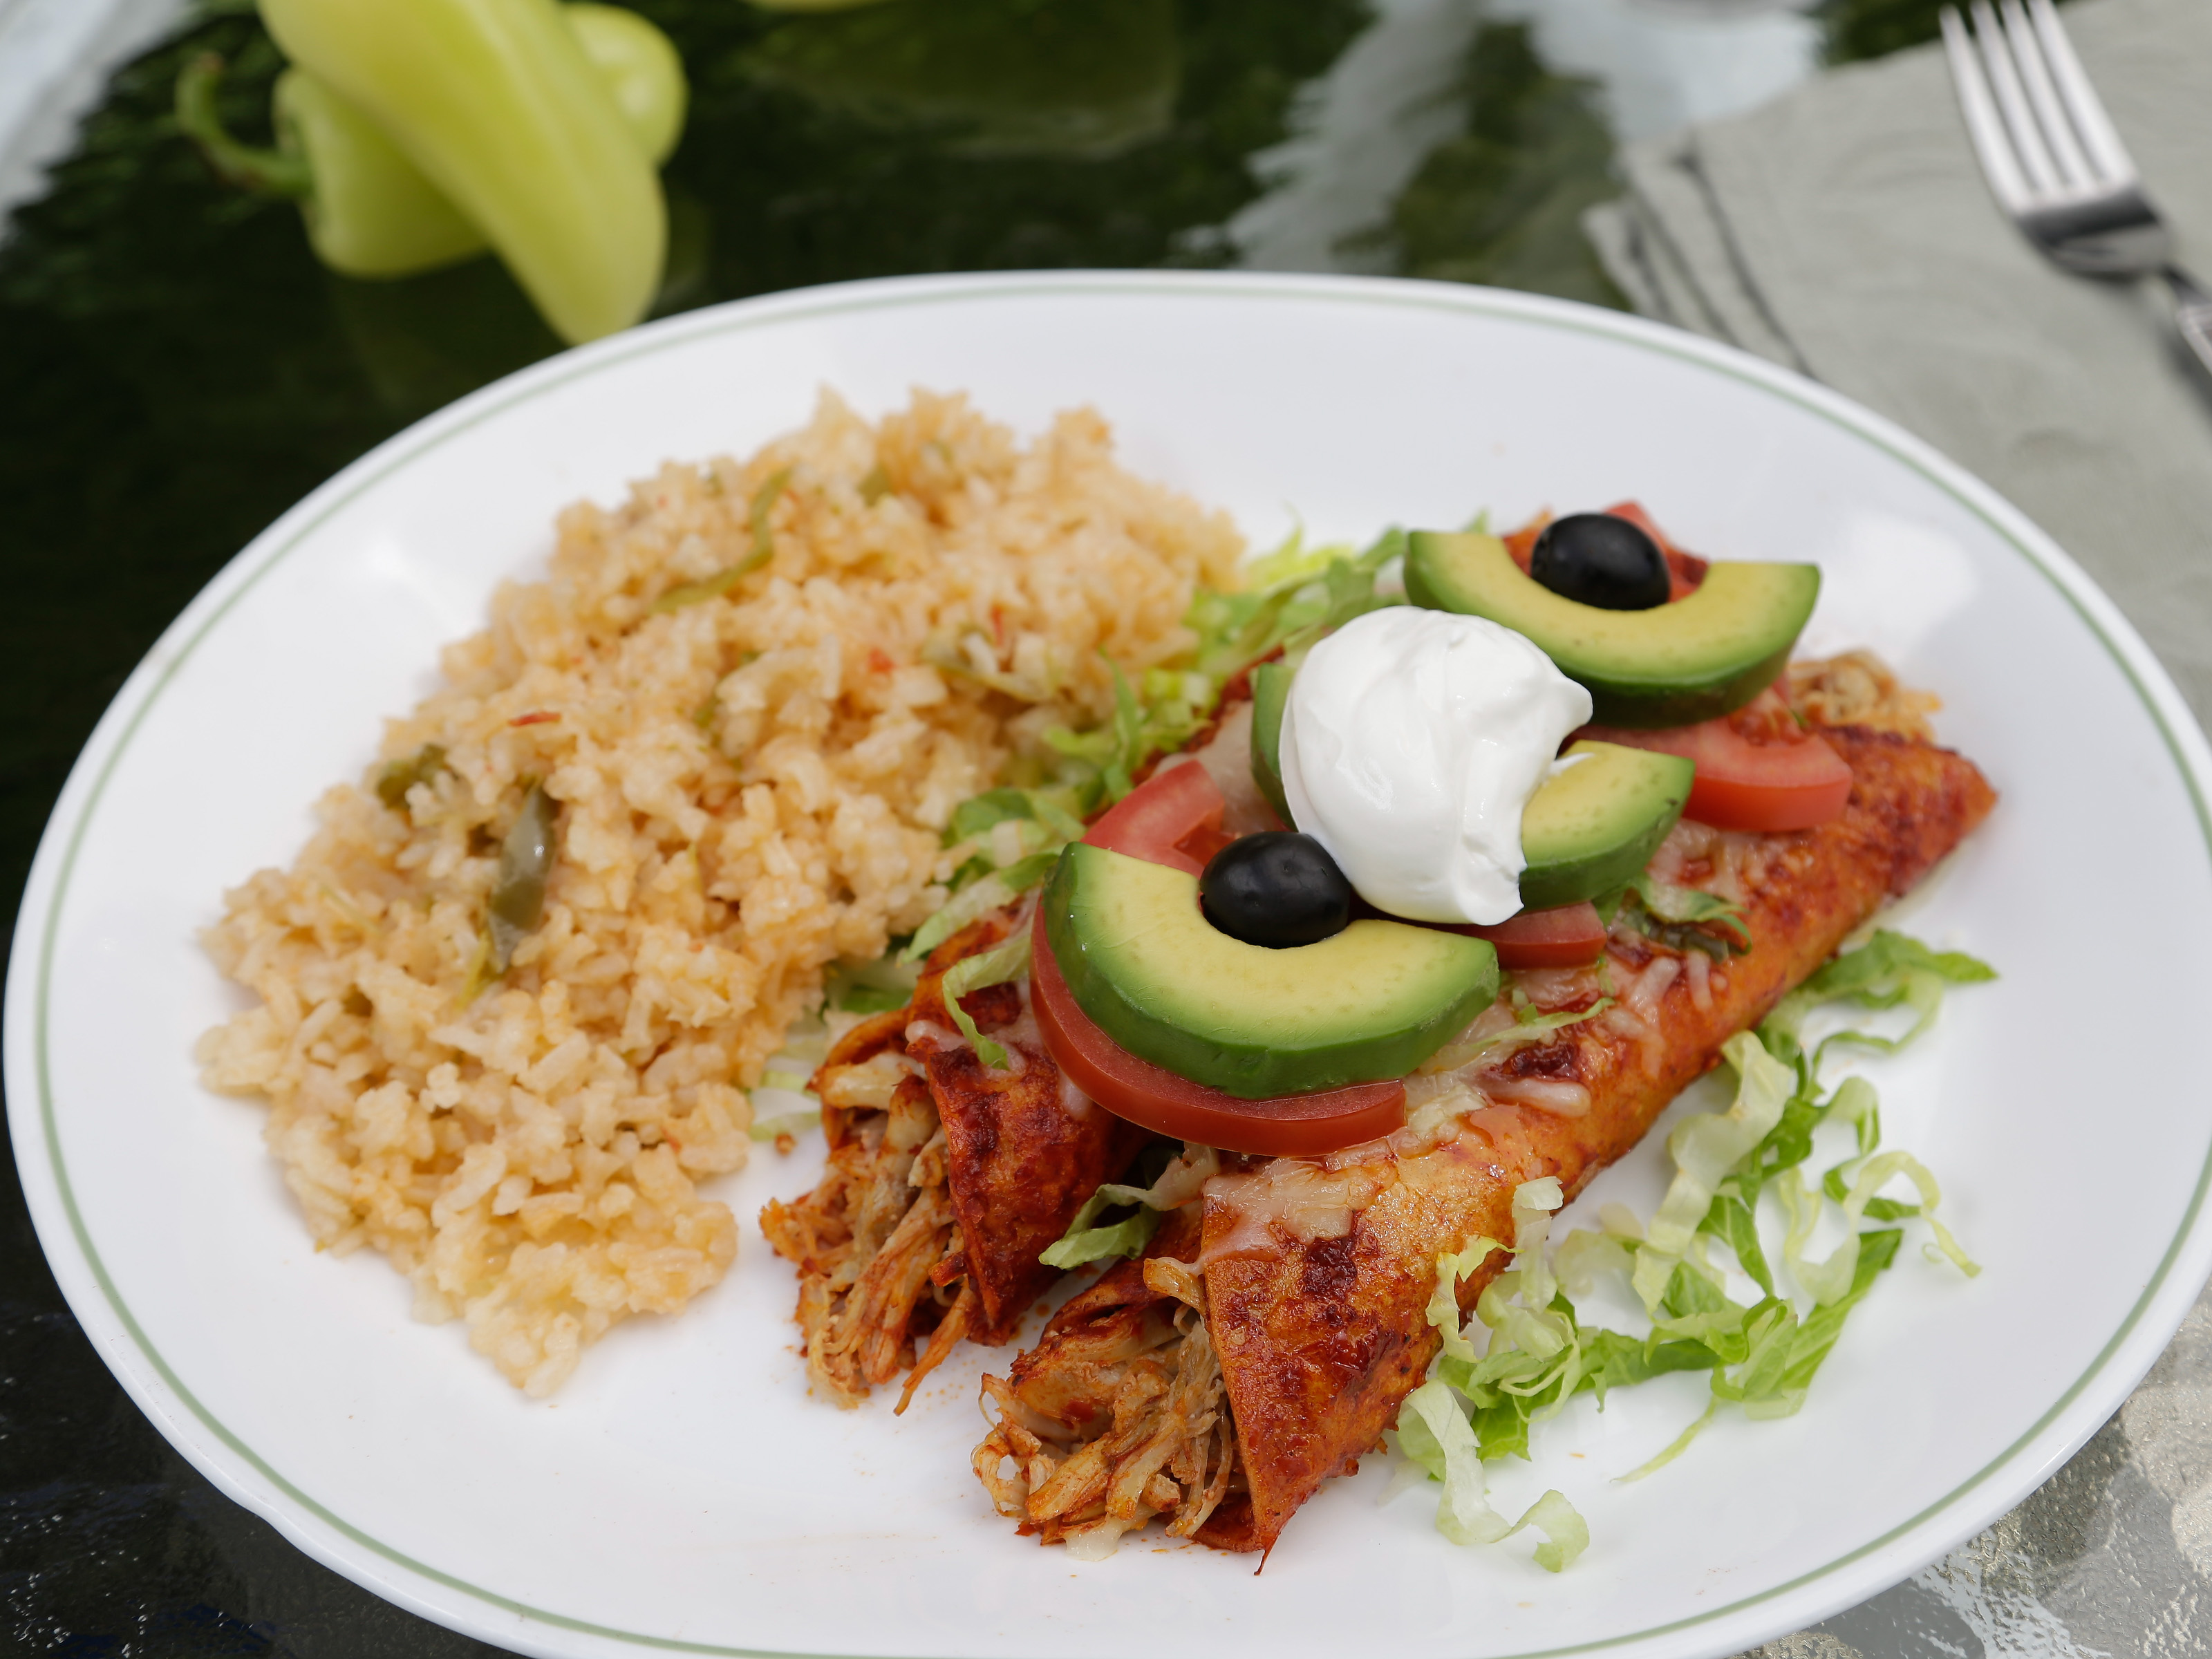 https://www.cookingchanneltv.com/content/dam/images/cook/fullset/2014/8/25/0/CCGMR303_Enchiladas-and-rice-recipe_s4x3.jpg